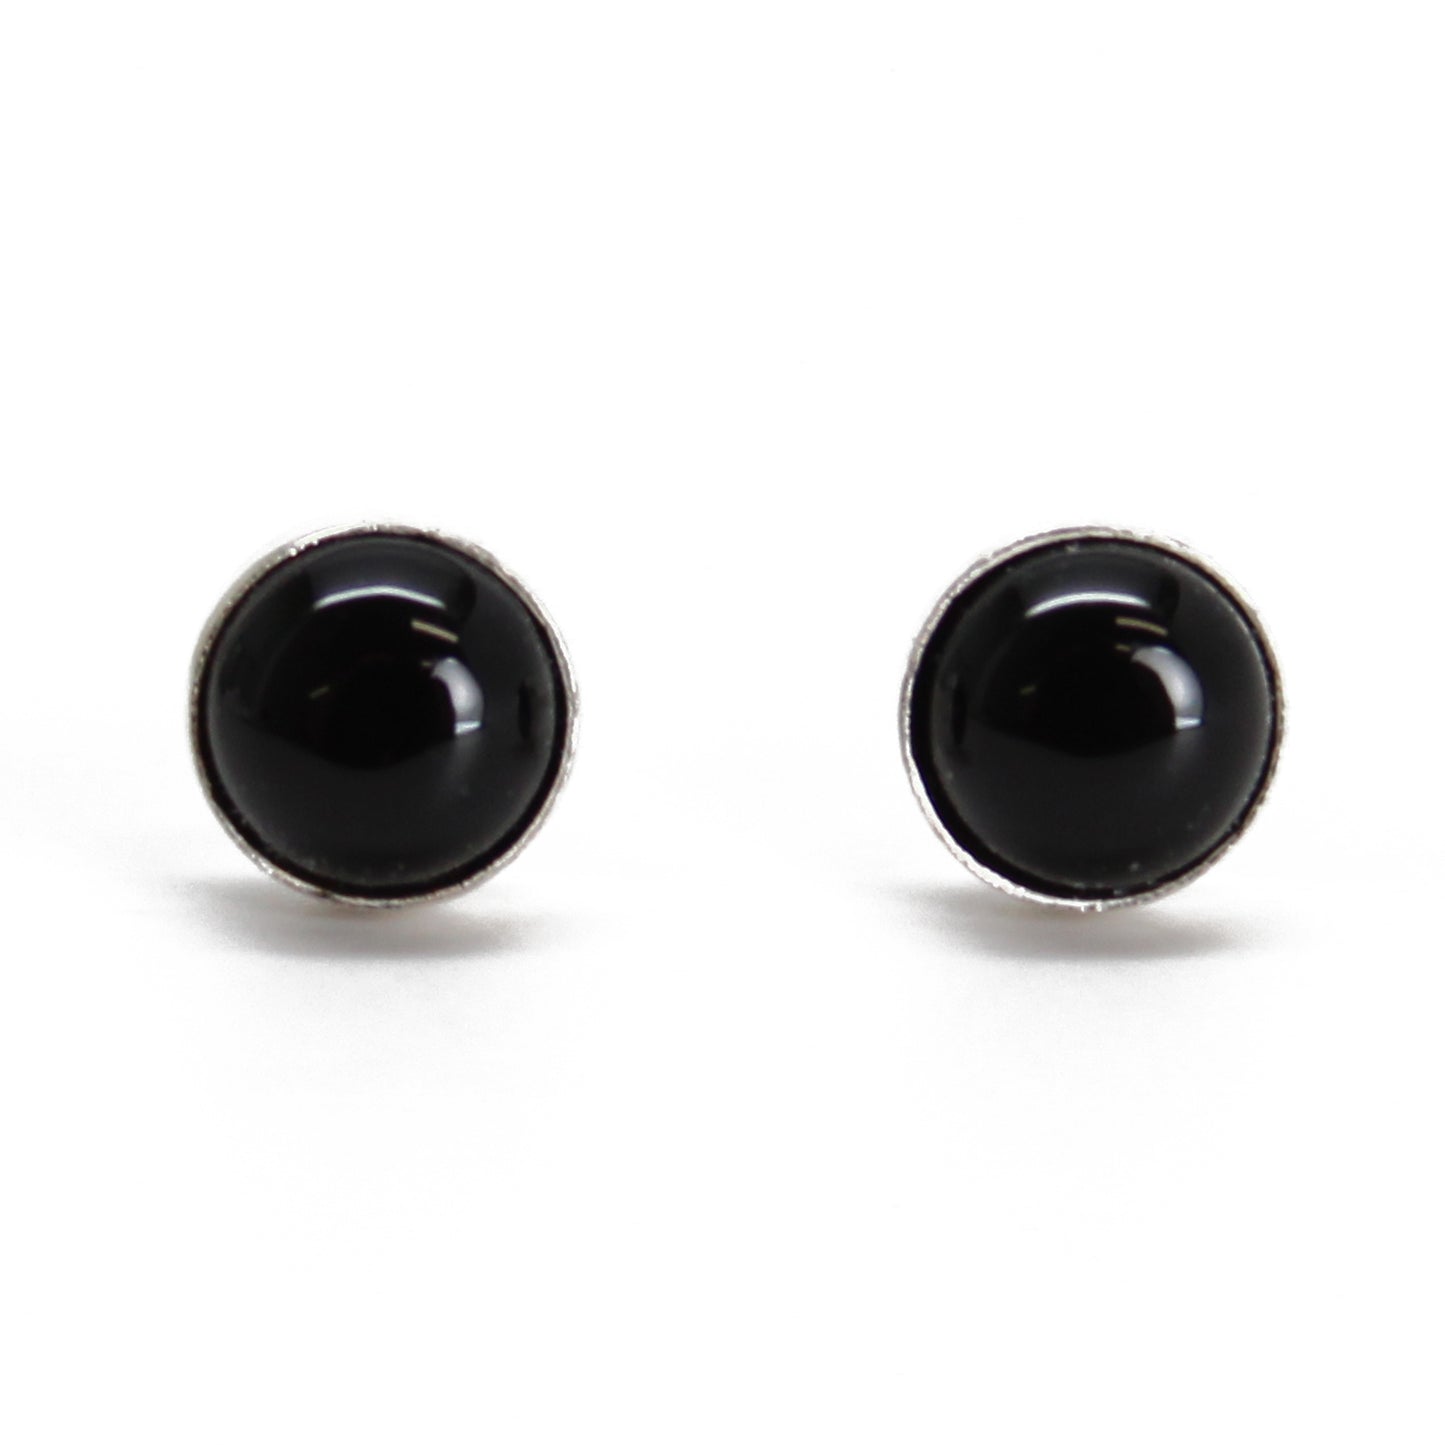 Handmade Black Onyx Stud Earrings, Small 4mm